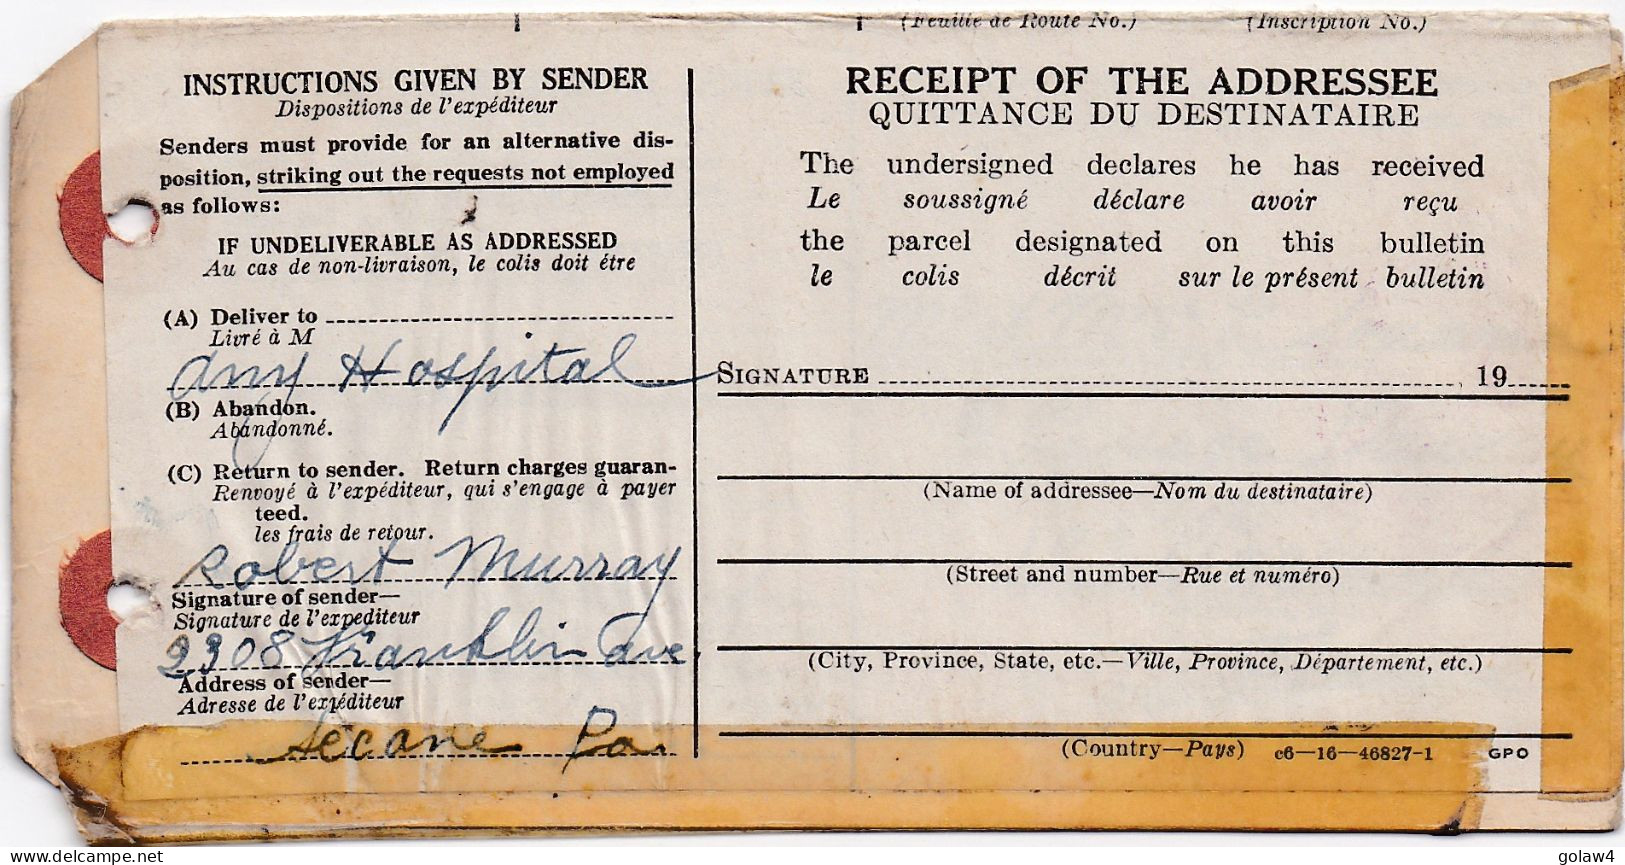 37158# DISPATCH NOTE BULLETIN EXPEDITION Obl SECANE PA PENNSYLVANIE 1947 - Cartas & Documentos